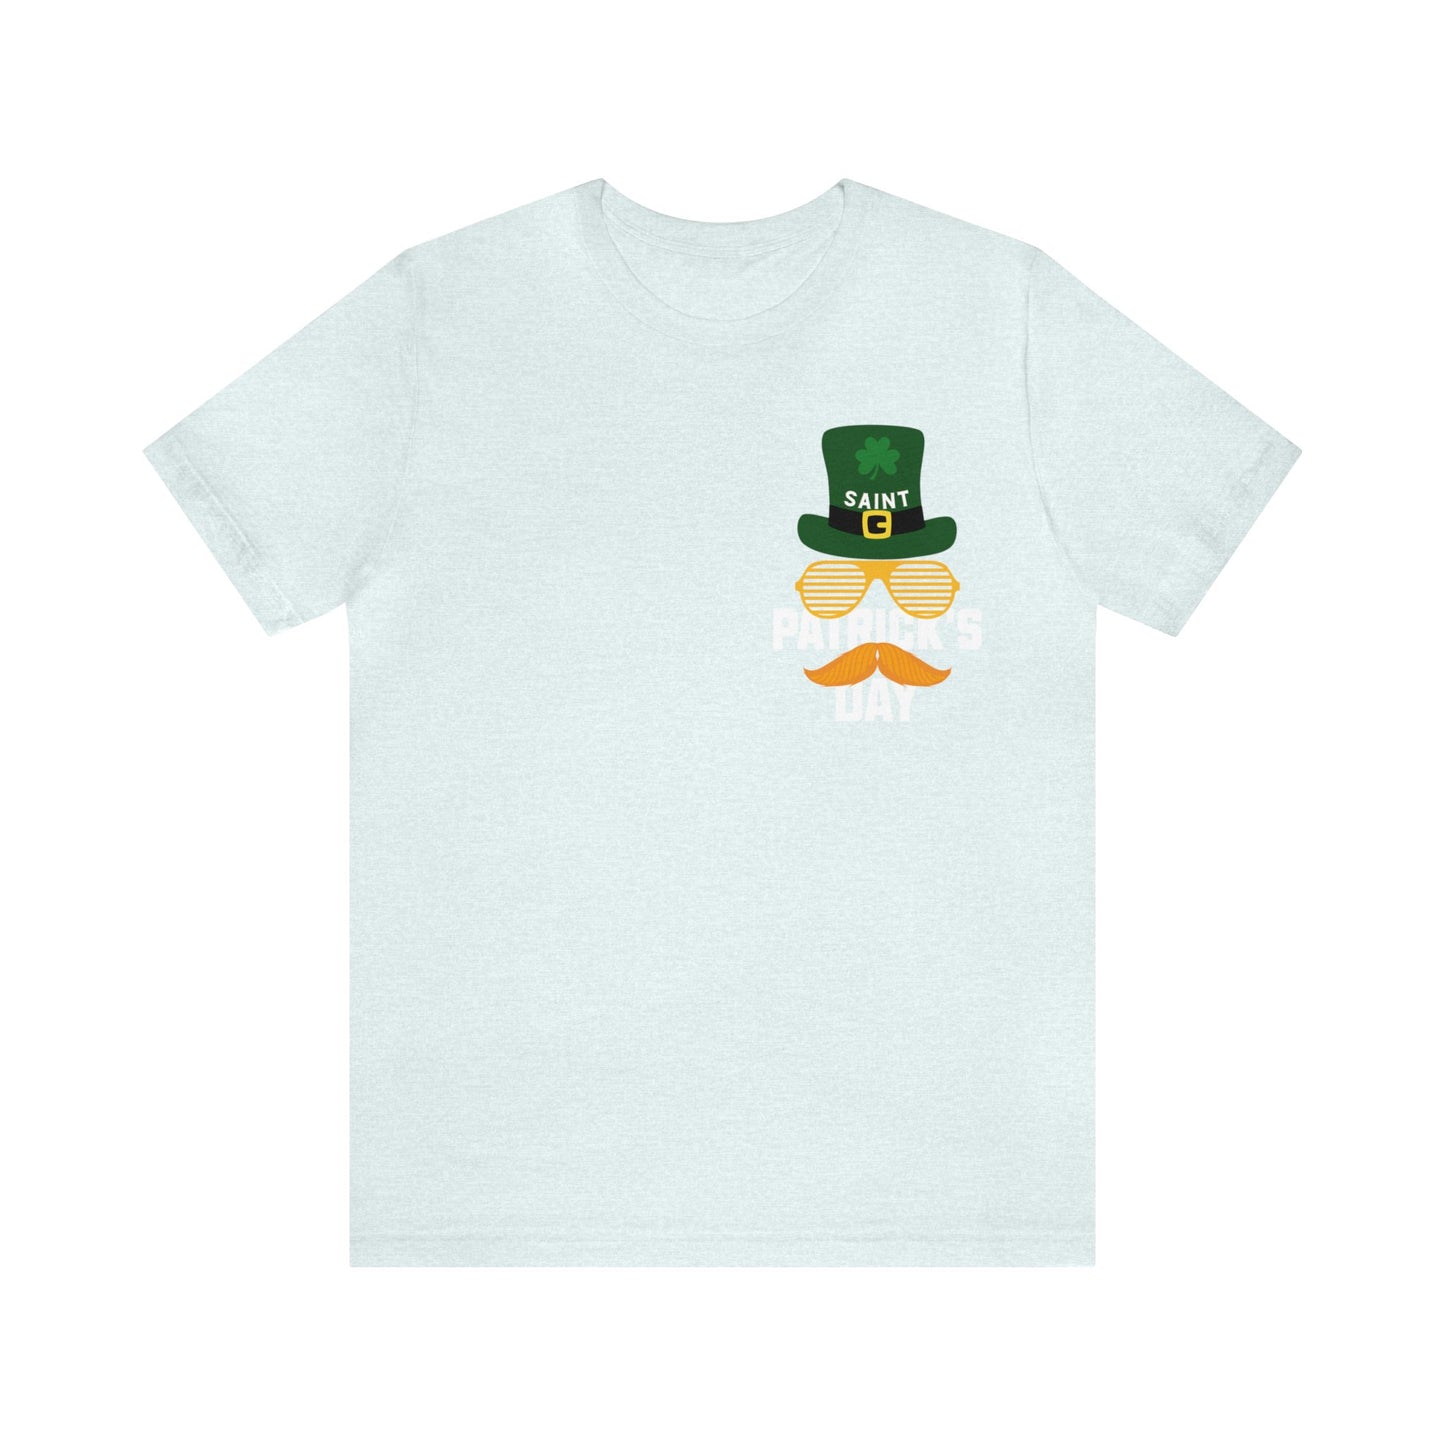 St Patrick's Day shirt feeling Lucky shirt St Paddys day shirt St Patrick hat shirt